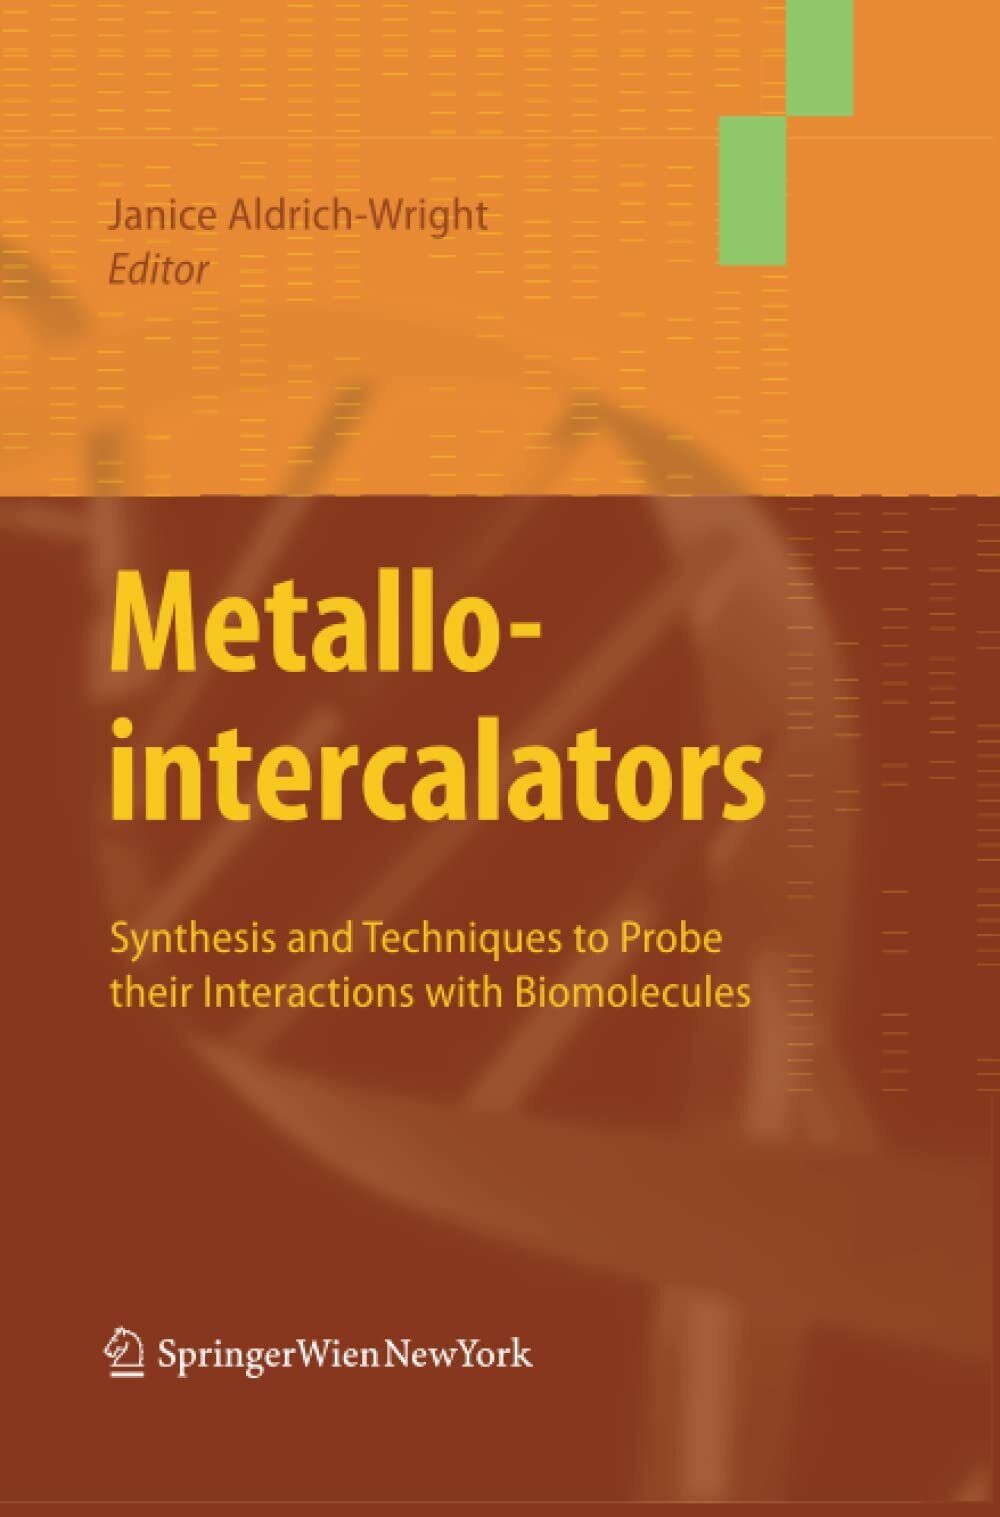 Metallointercalators -  Janice Aldrich-Wright - Springer, 2014